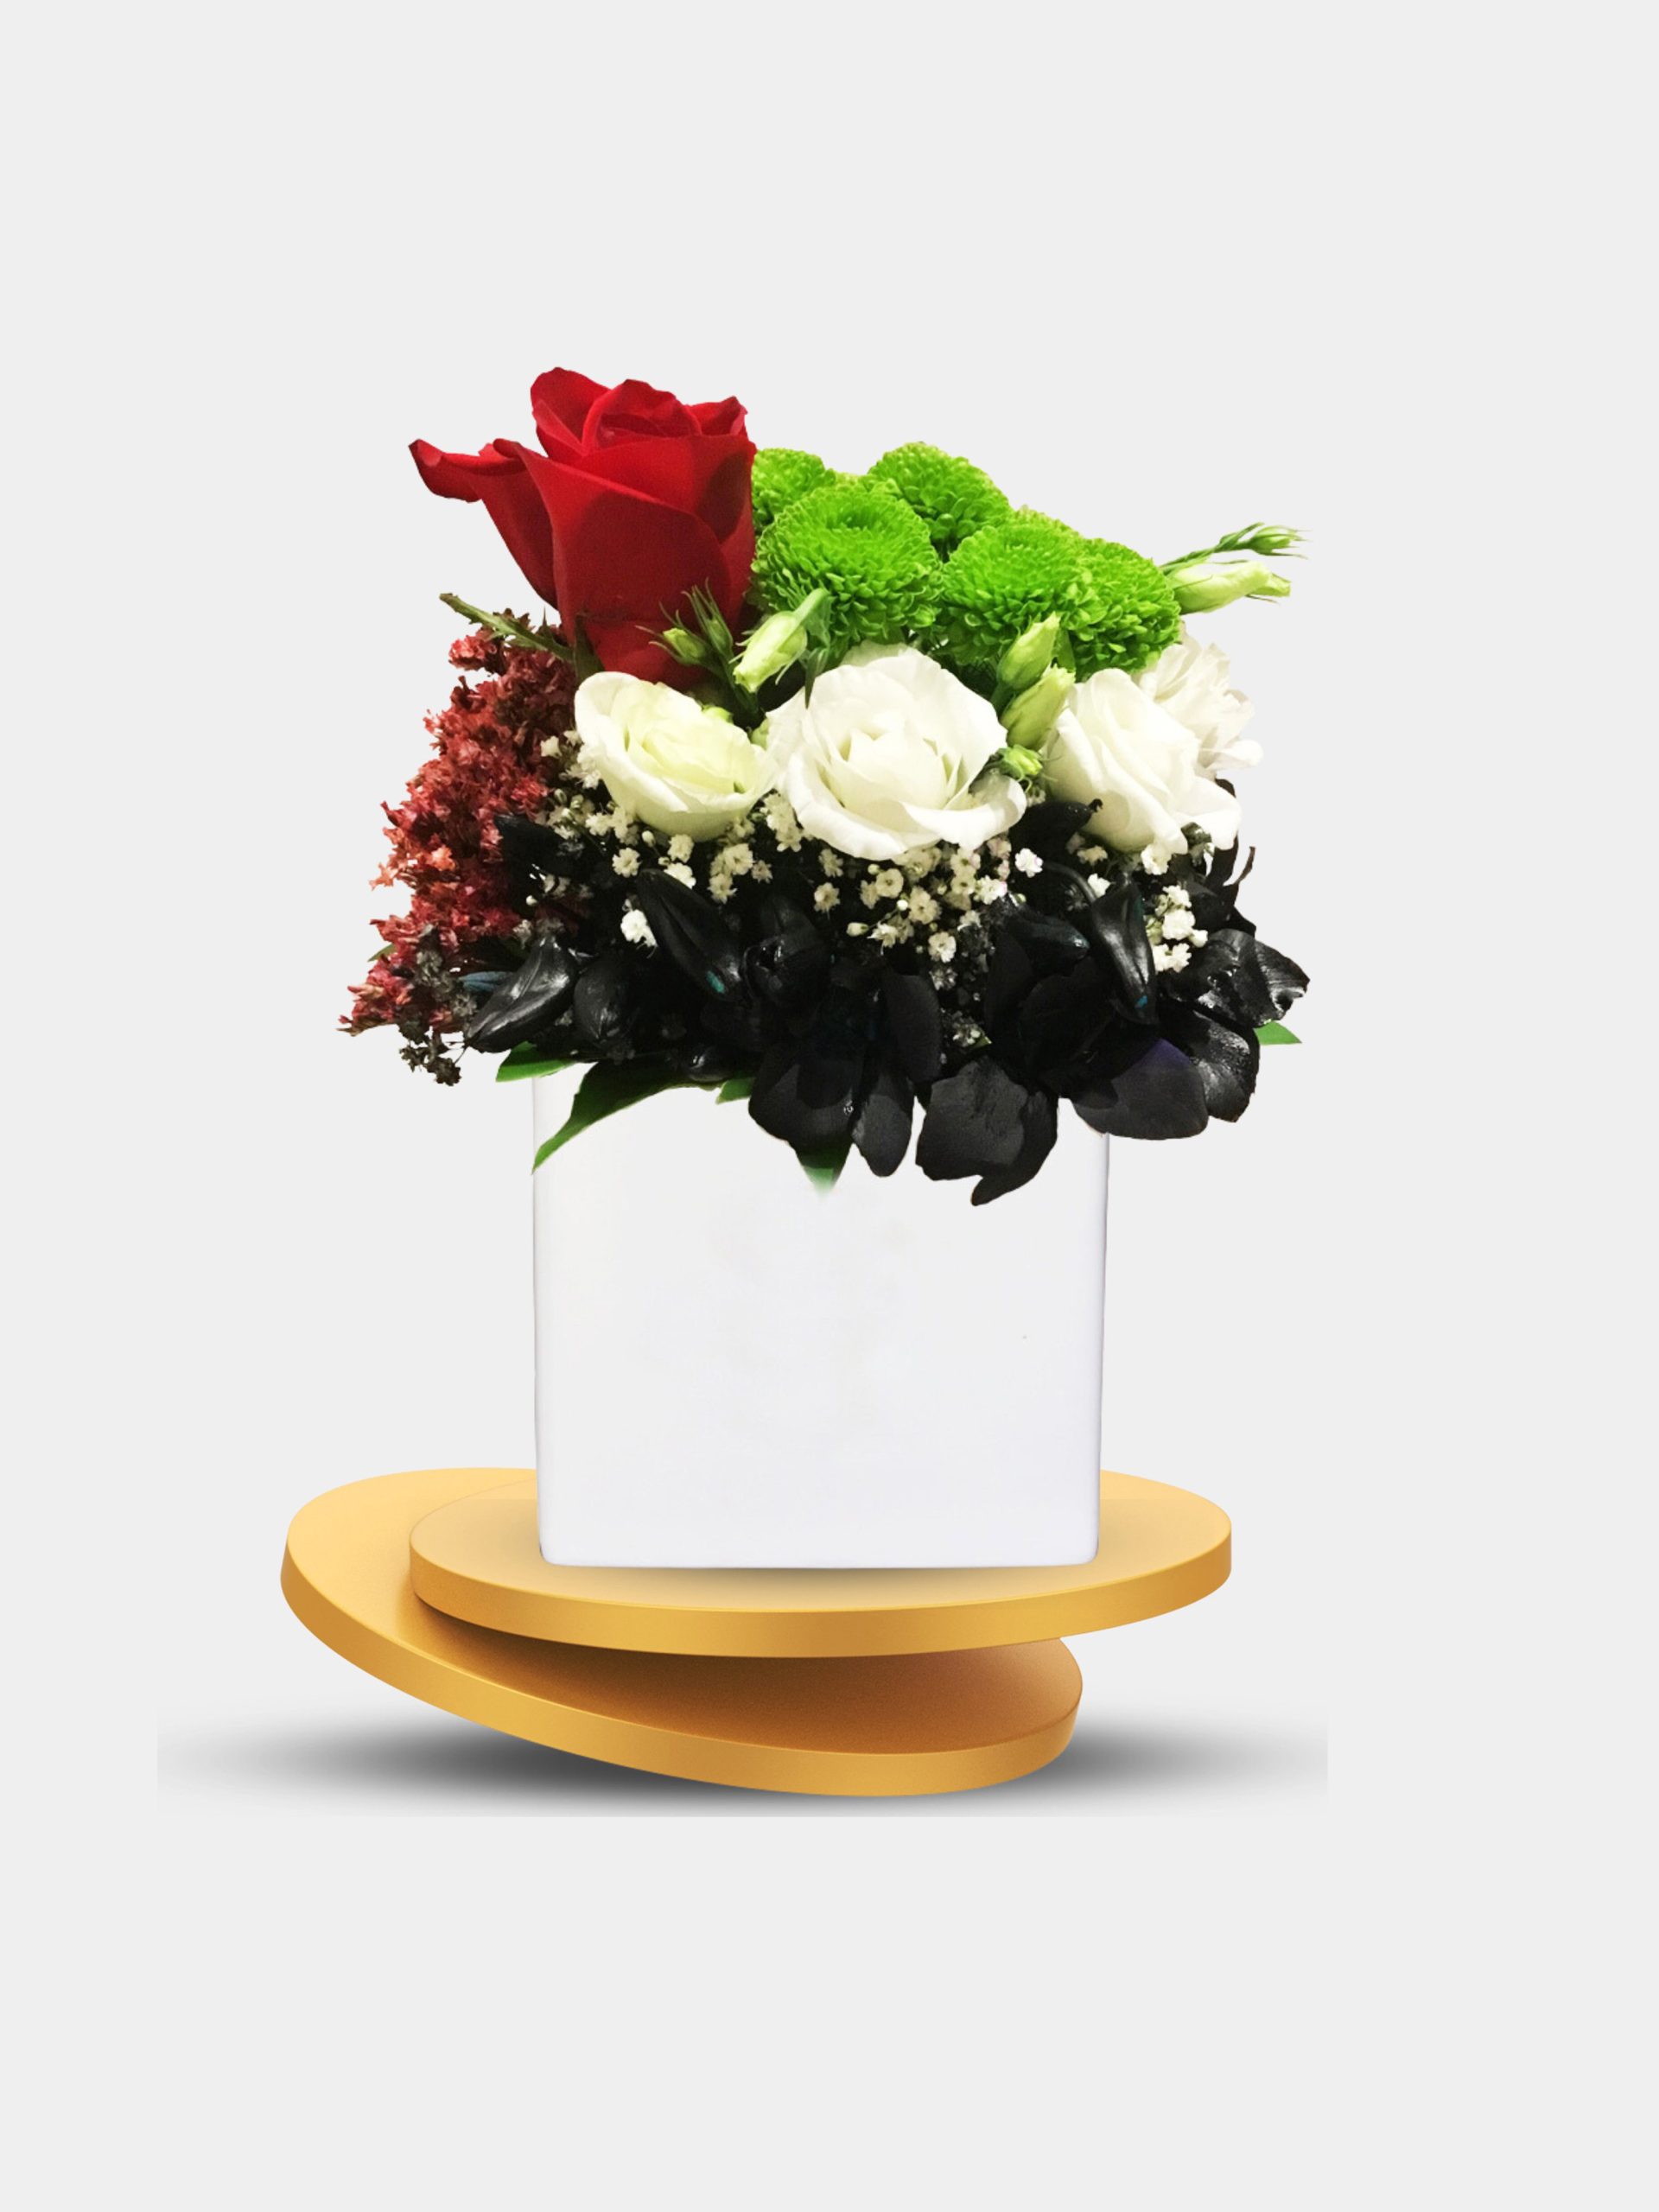 UAE National Day Flowers in Glass Vase Arrangement